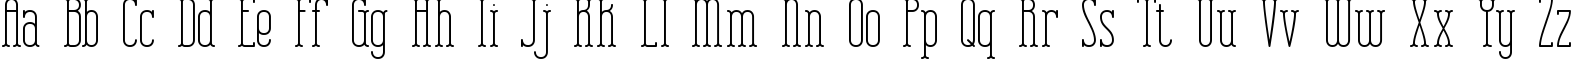 Пример написания английского алфавита шрифтом Combustion Plain BRK